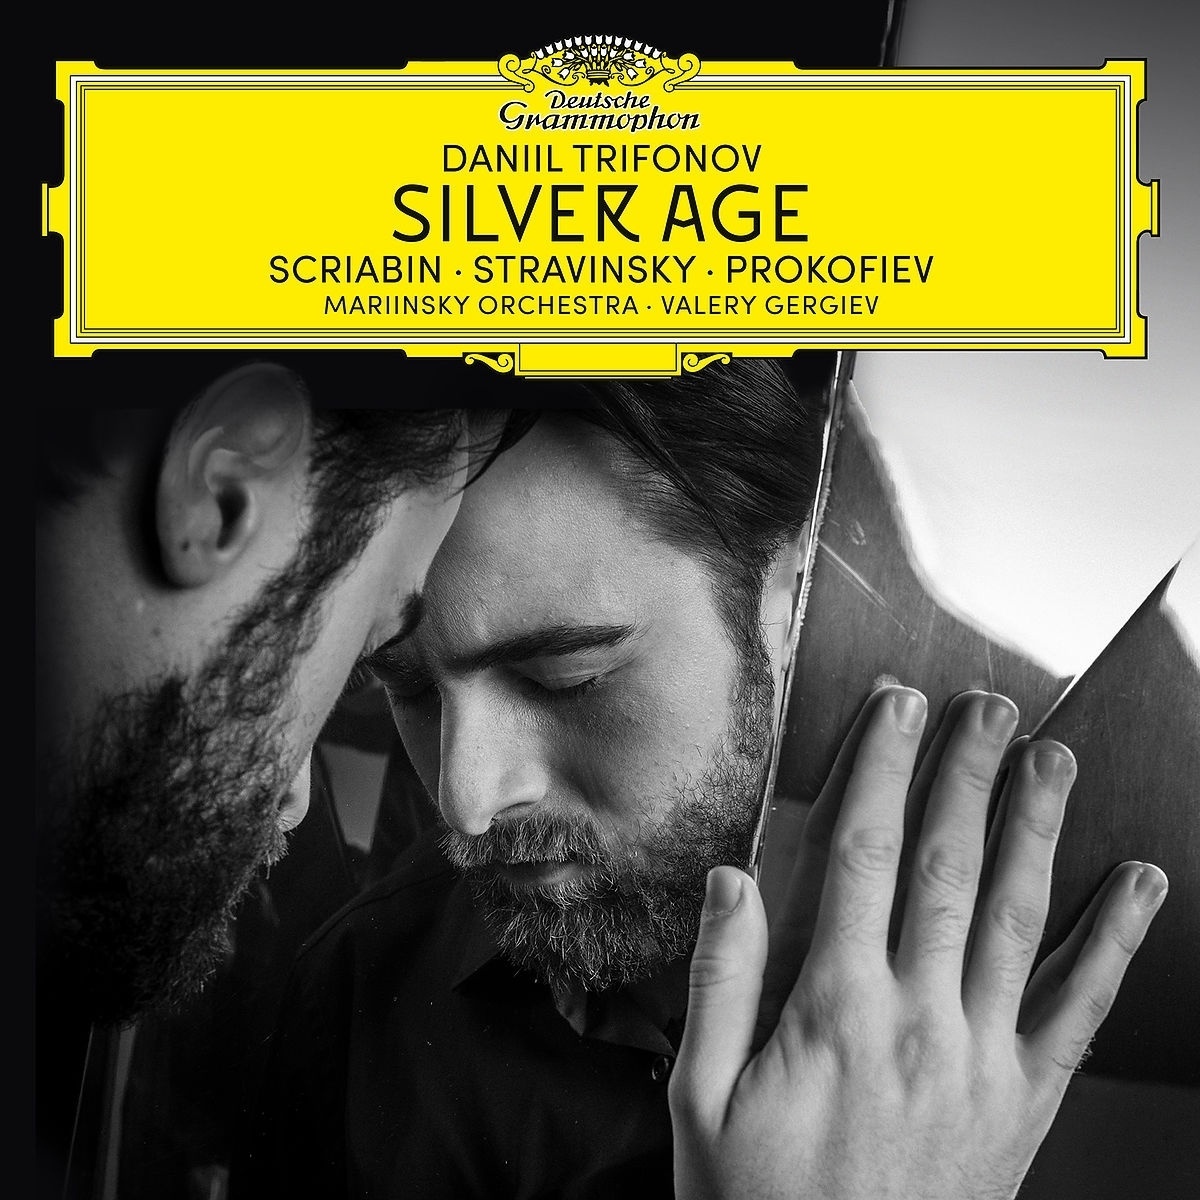 Silver Age - Daniil Trifonov  Mariinsky Orchestra  Valery Gergiev. (CD)